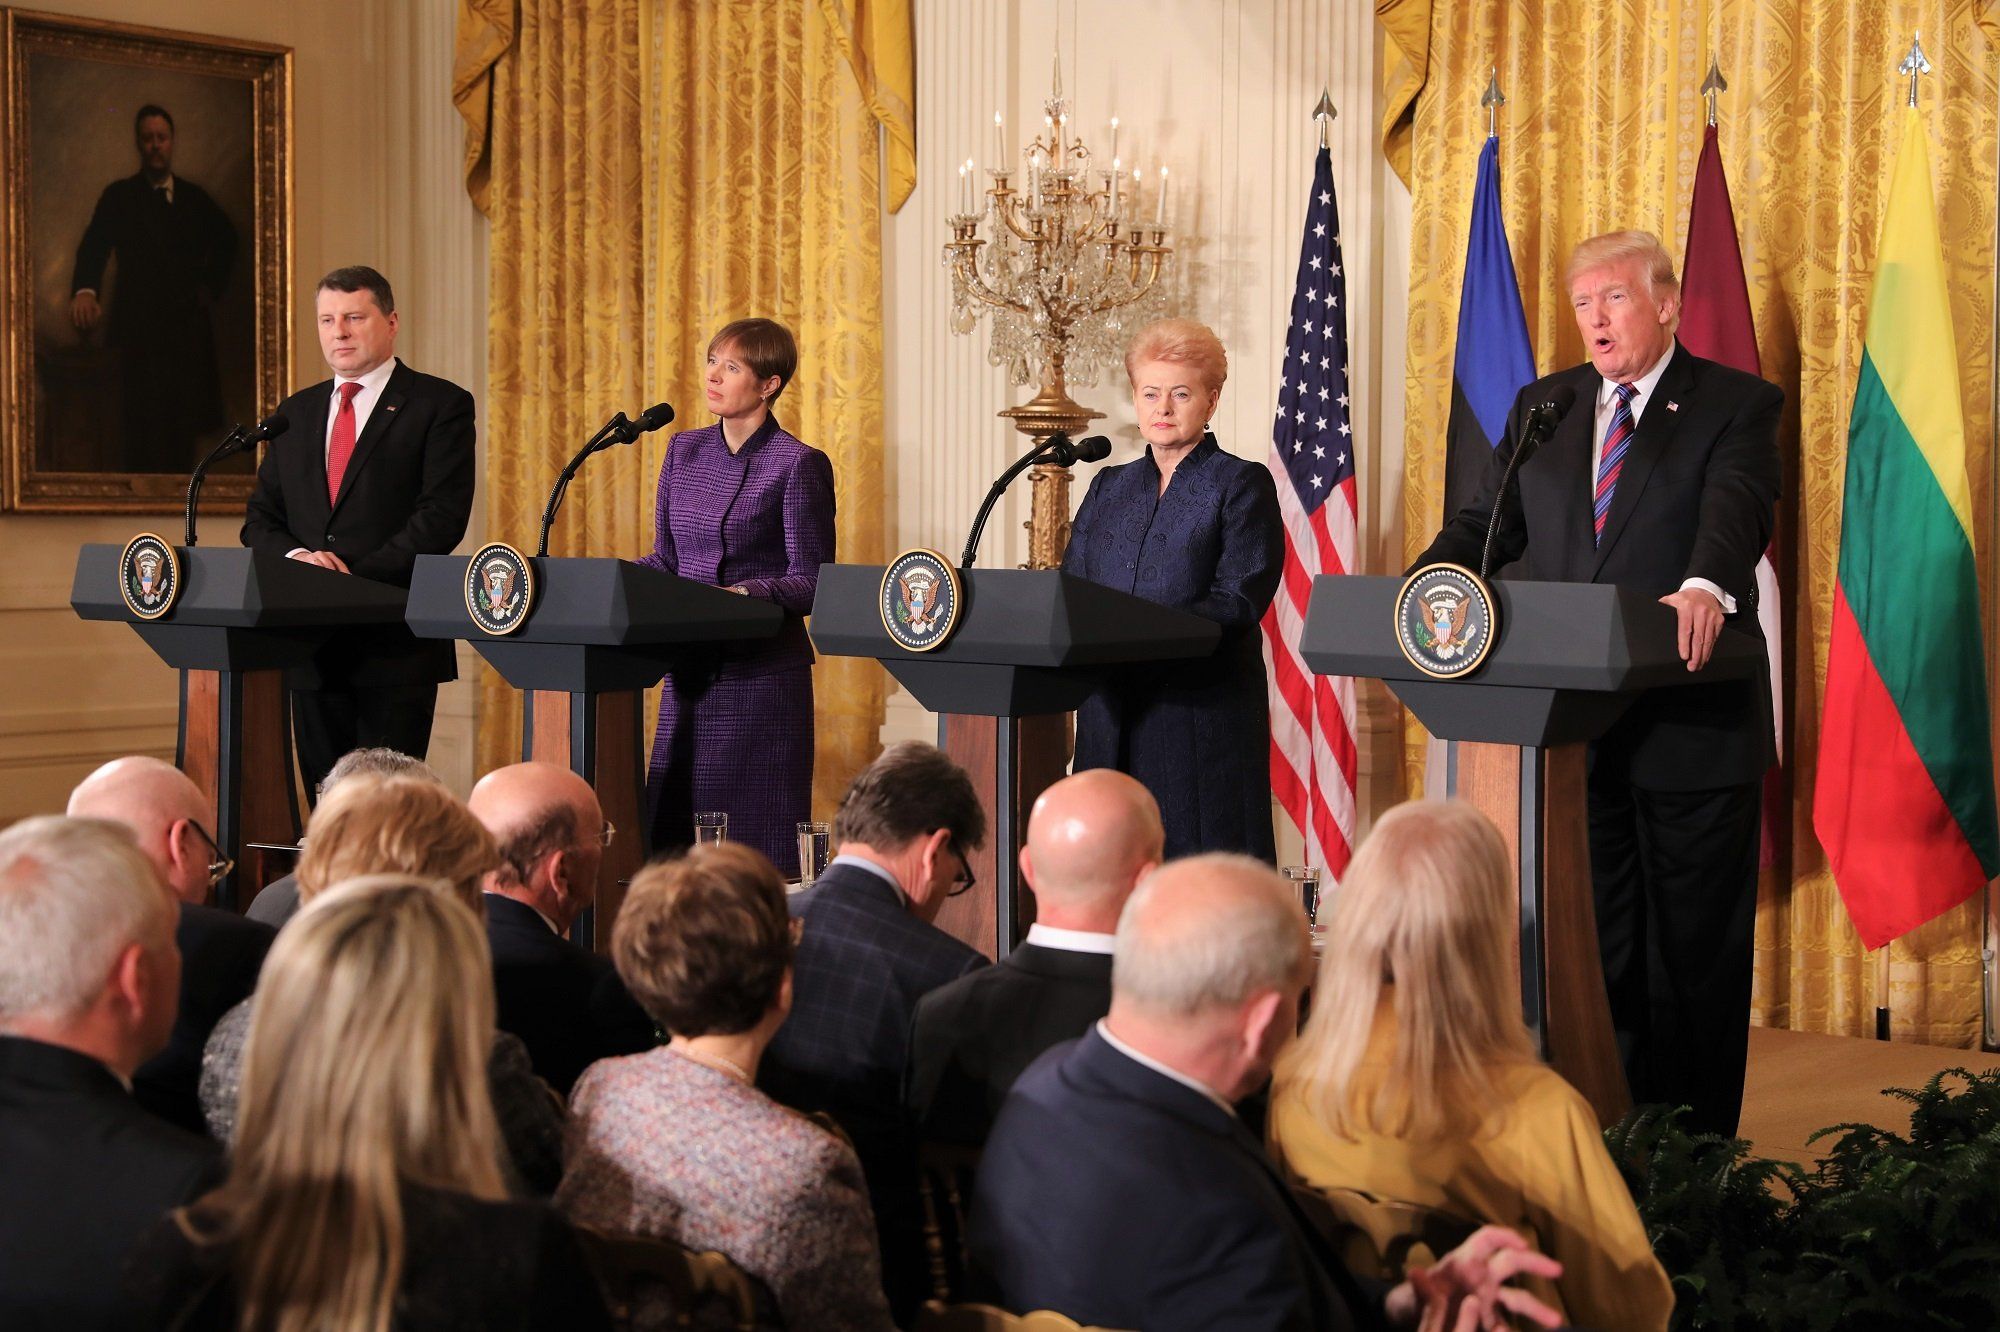 Встреча (слева на право) президентов Прибалтики Раймондса Вейониса, Керсти Кальюлайд, Дали Грибаускайте и президента США Дональда Трампа, 3 апреля 2018